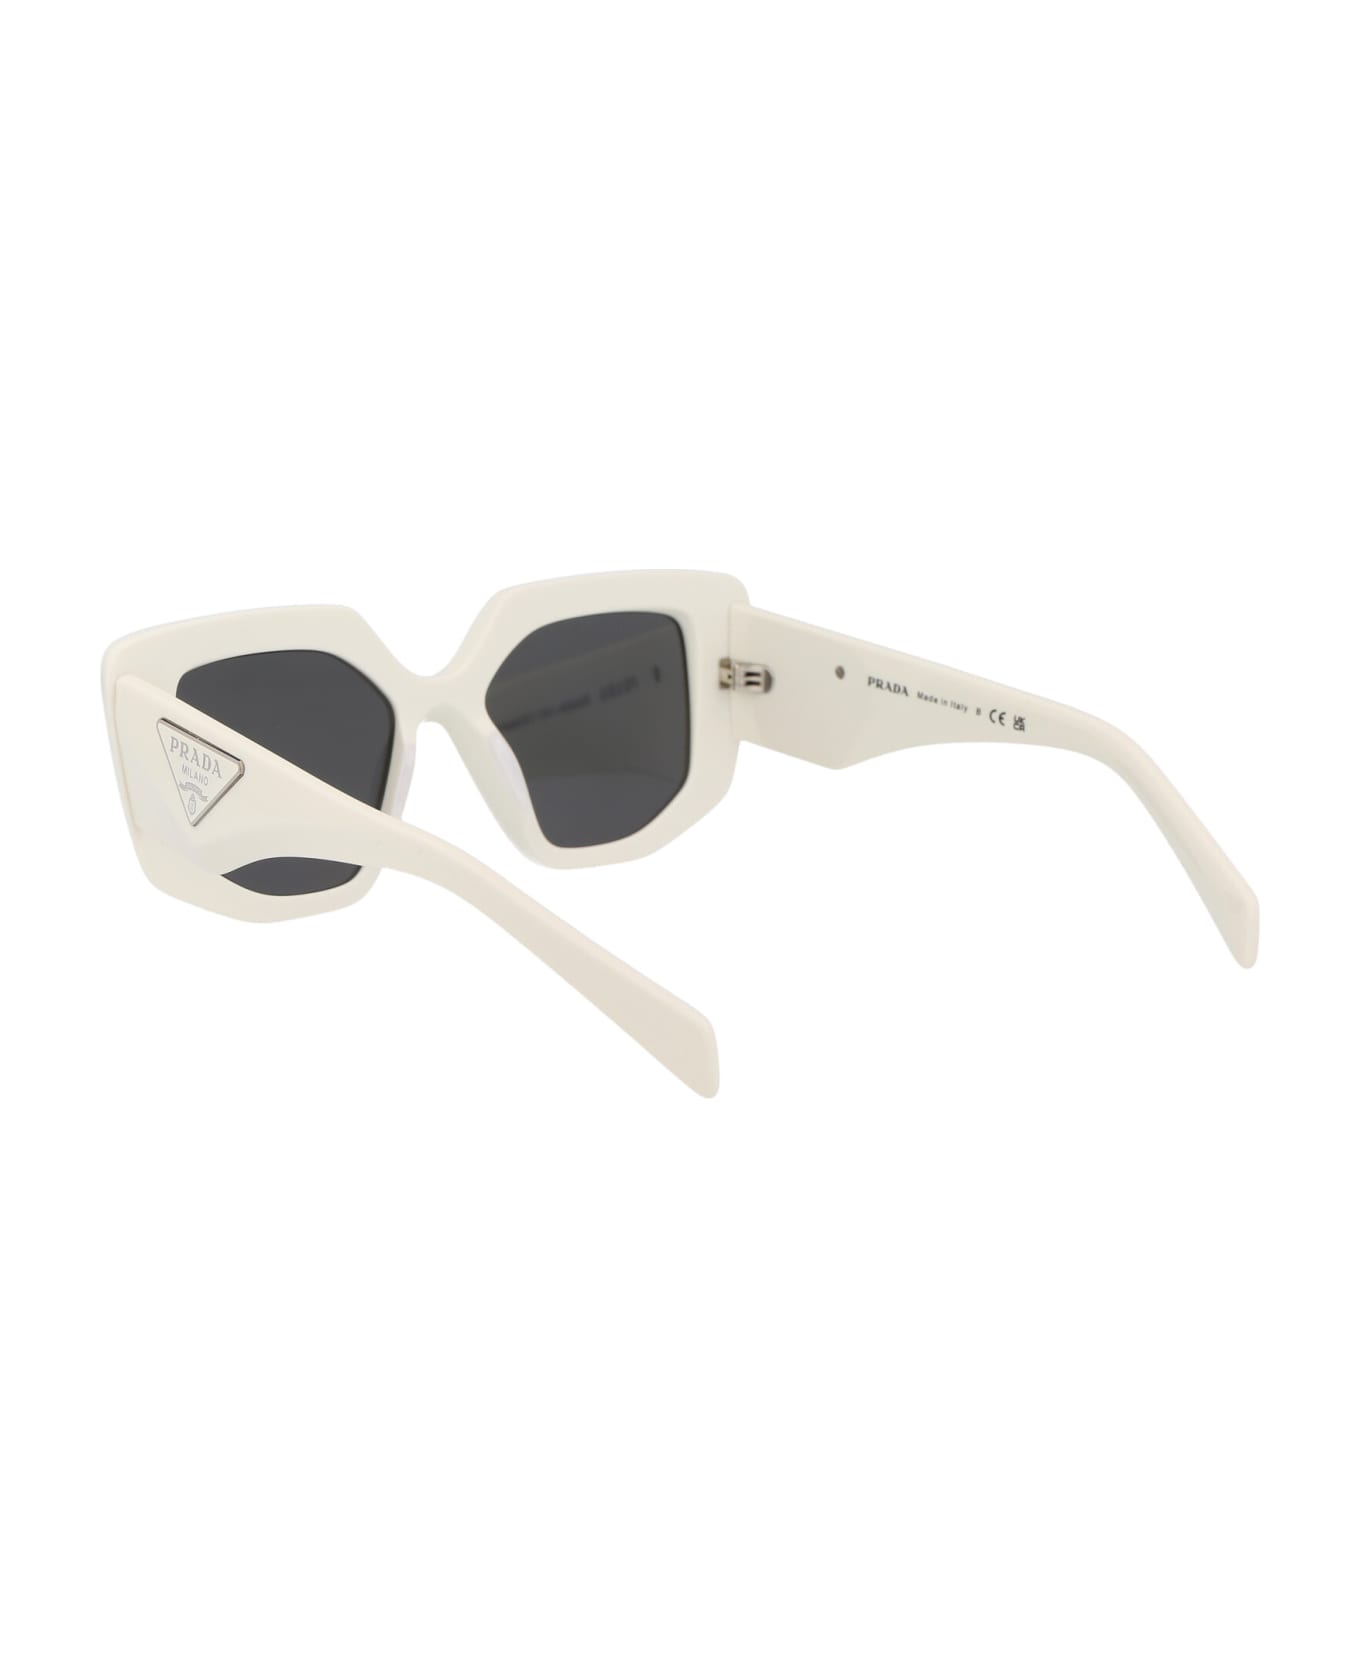 Prada Eyewear 0pr 14zs Sunglasses - 1425S0 TALC